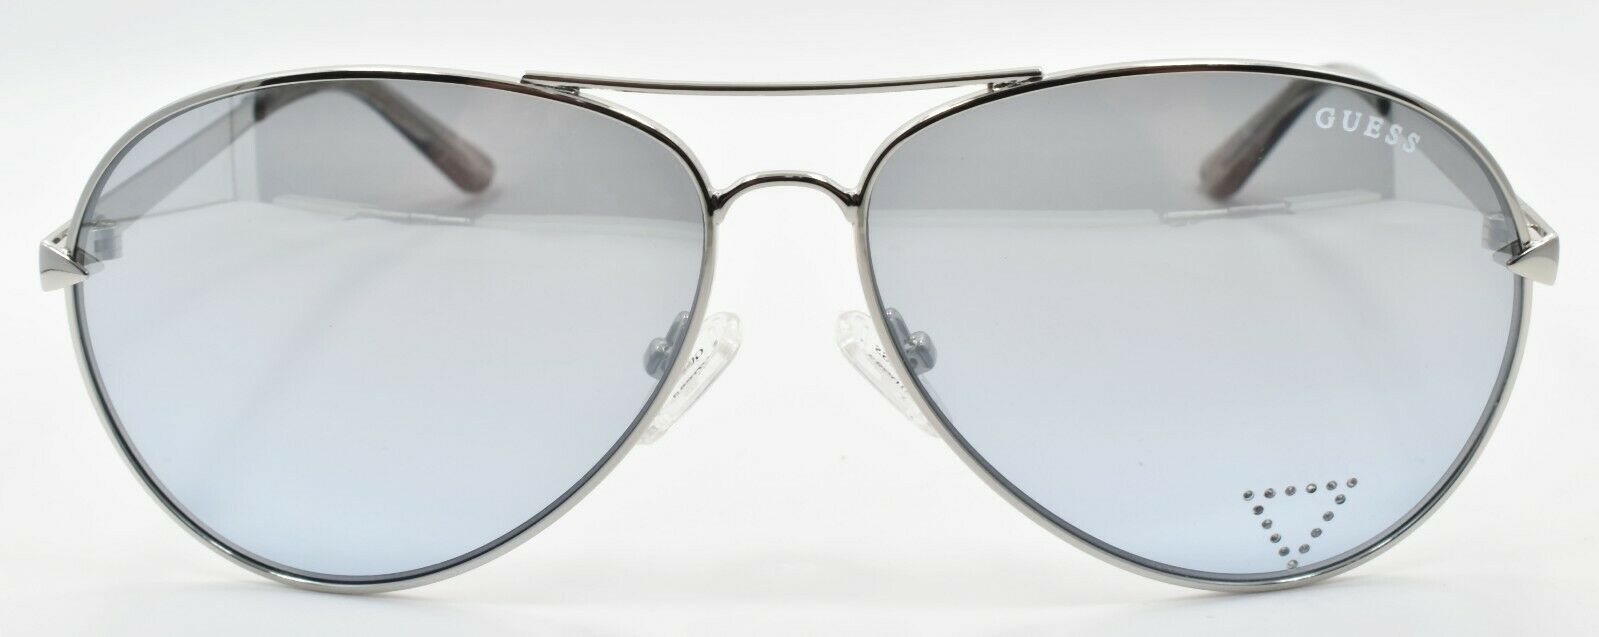 2-GUESS GU7616-S 10X Women's Sunglasses Aviator 58-12-140 Shiny Nickeltin / Blue-889214091475-IKSpecs